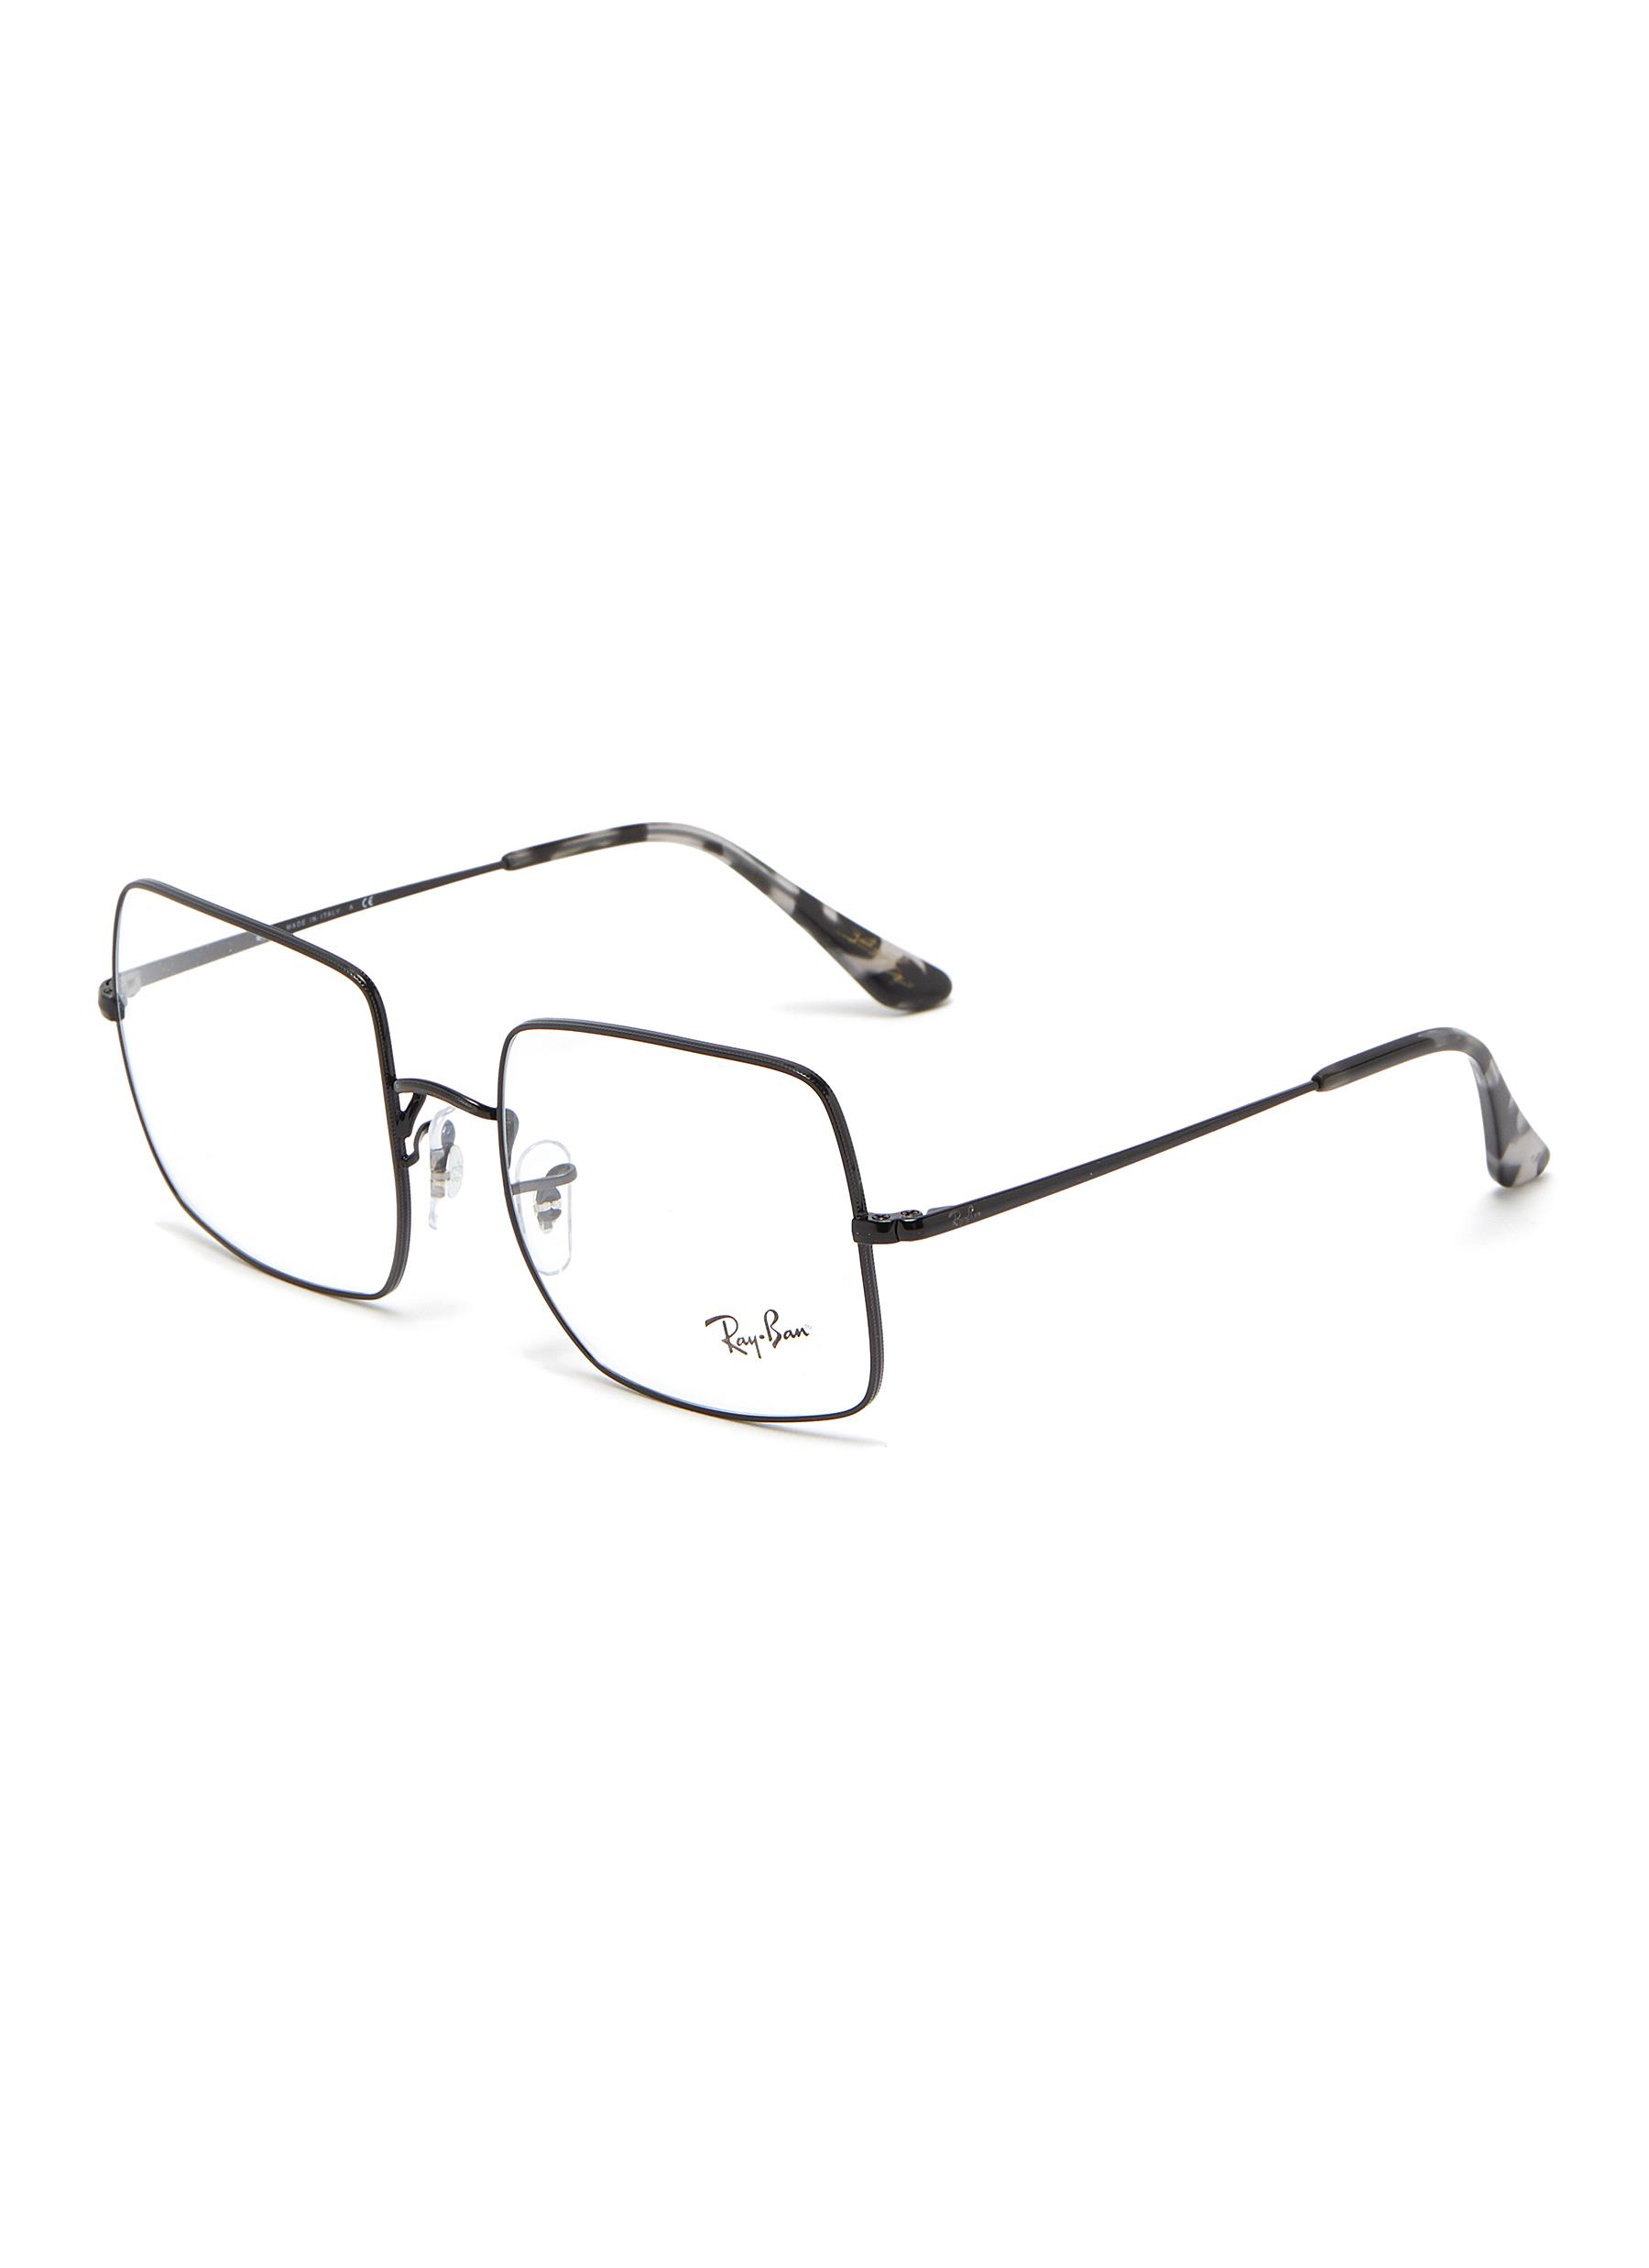 rectangular ray ban glasses